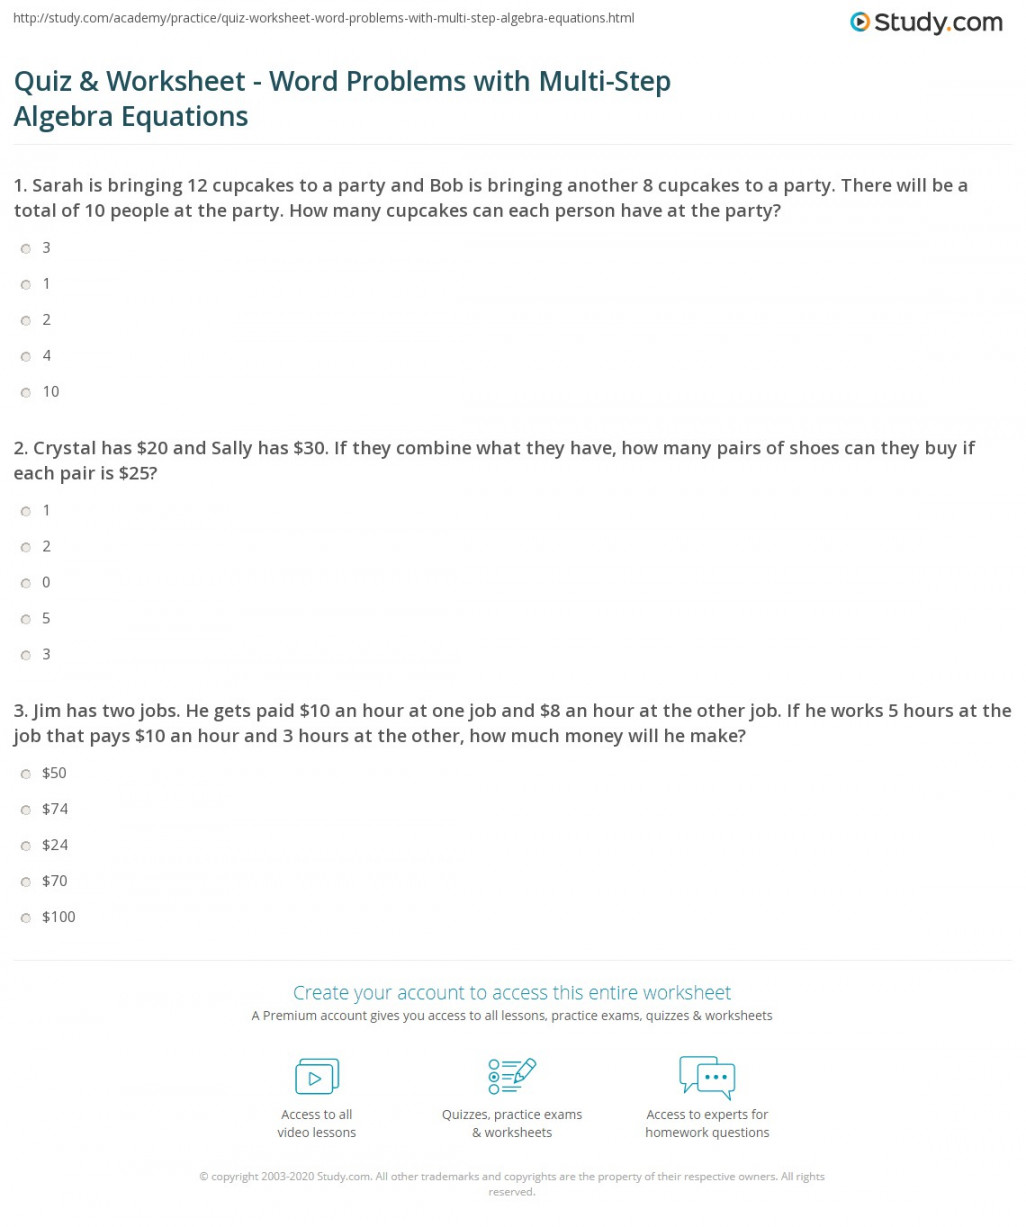 Quiz & Worksheet - Word Problems with Multi-Step Algebra Equations